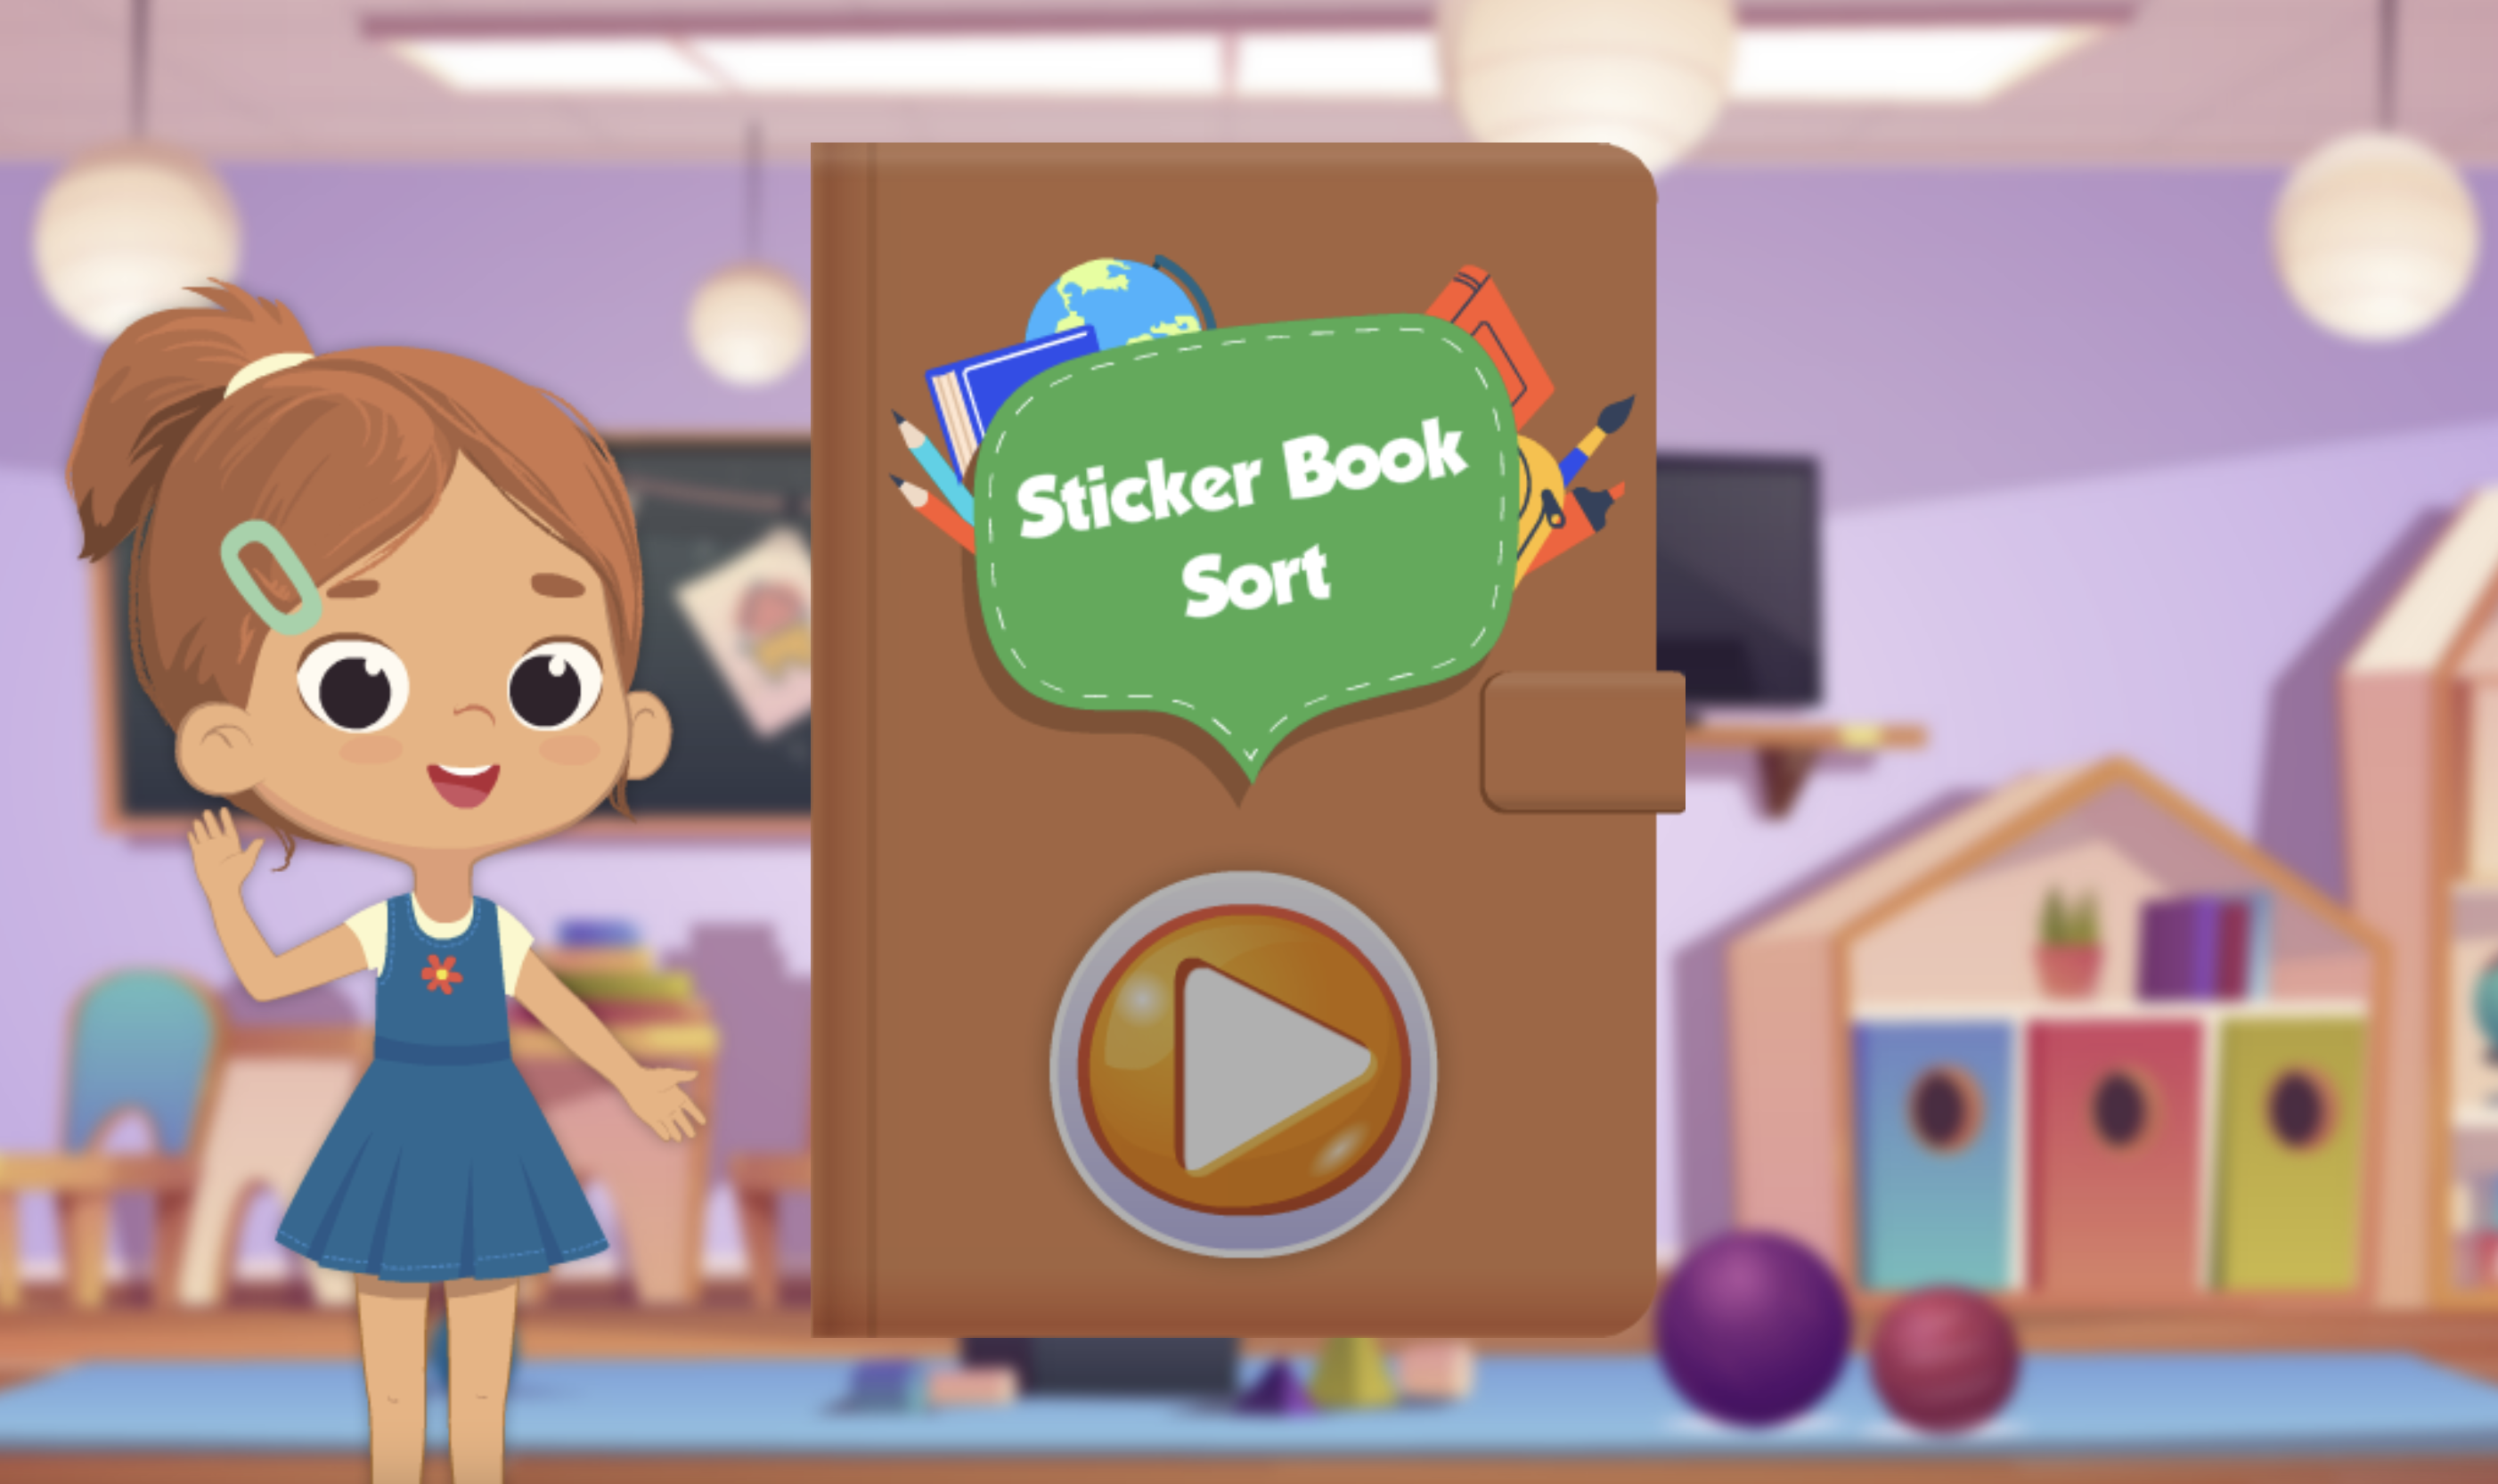 Sticker book sort game